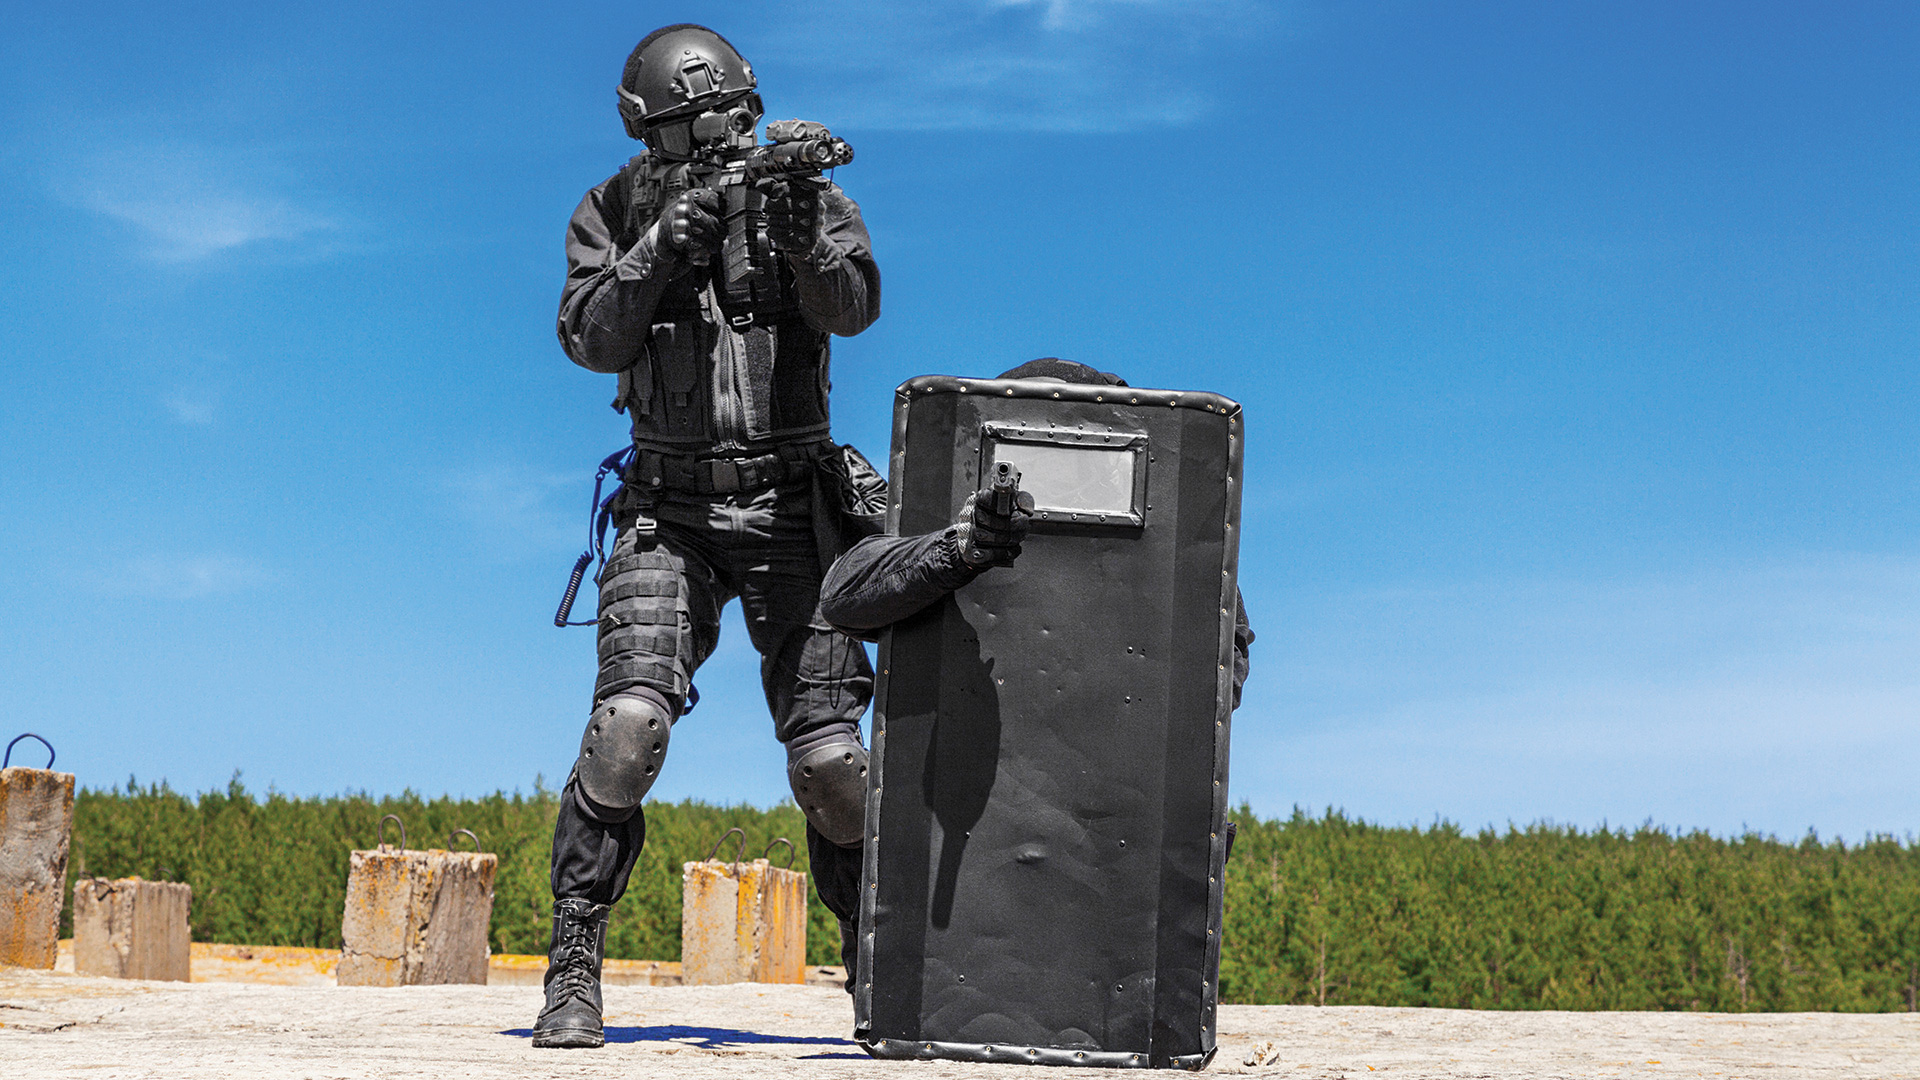 https://files.apbweb.com/wp-content/uploads/2021/09/swat-officers-with-ballistic-shield.jpg